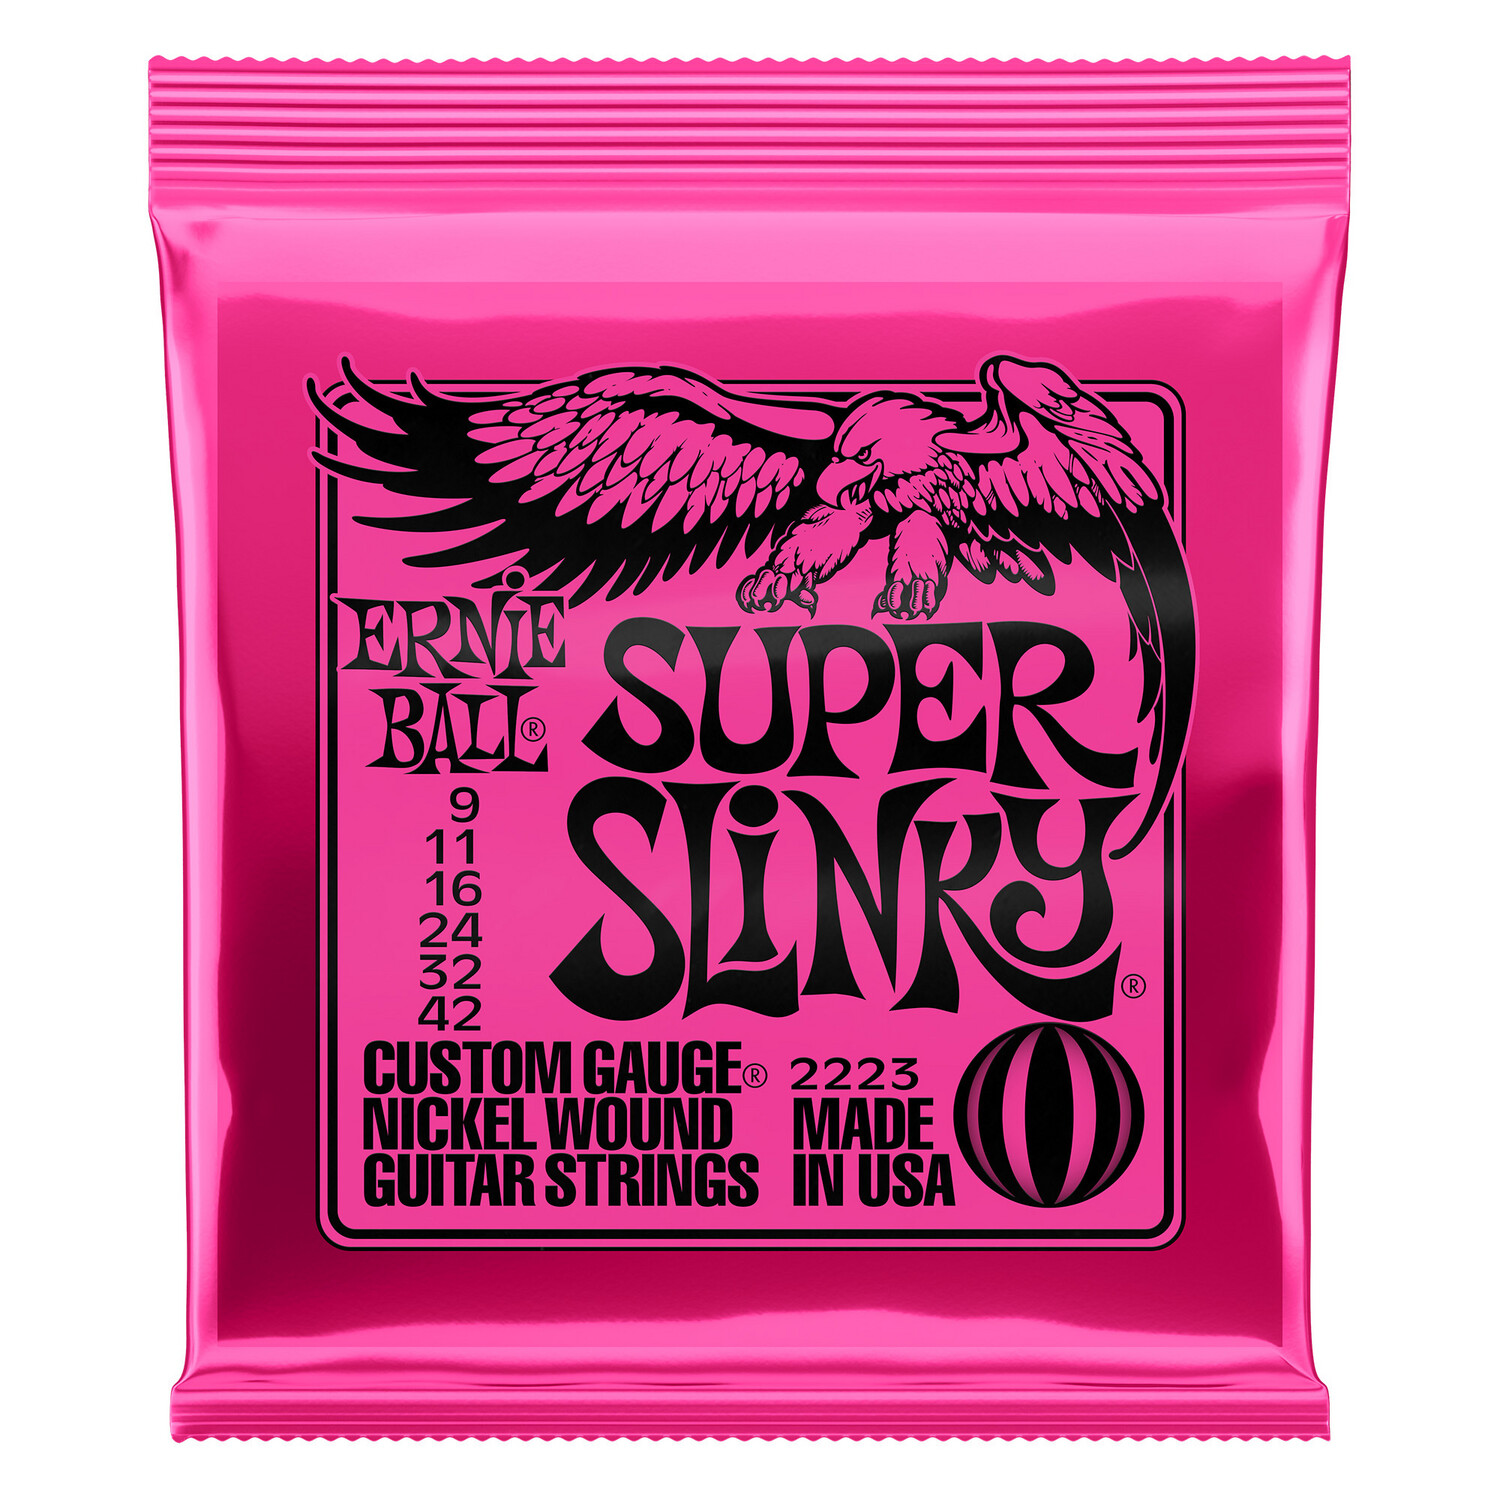 Ernie Ball Super Slinky Electric Guitar Strings - 2223